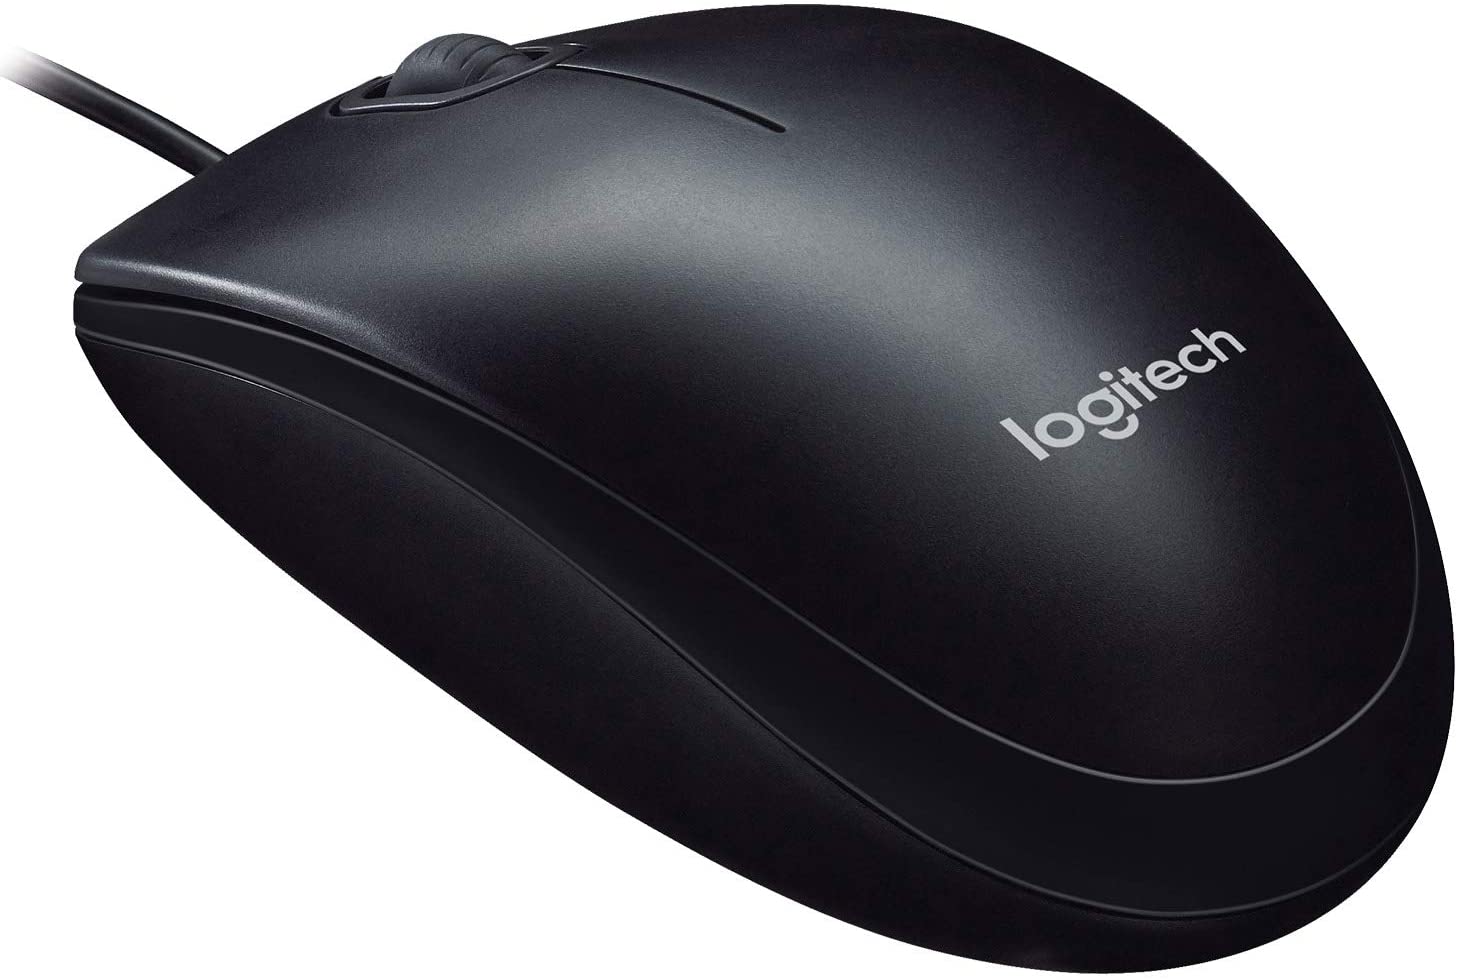 Logitech Wired USB DPI Ambidextrous Office Mouse for De JG Superstore